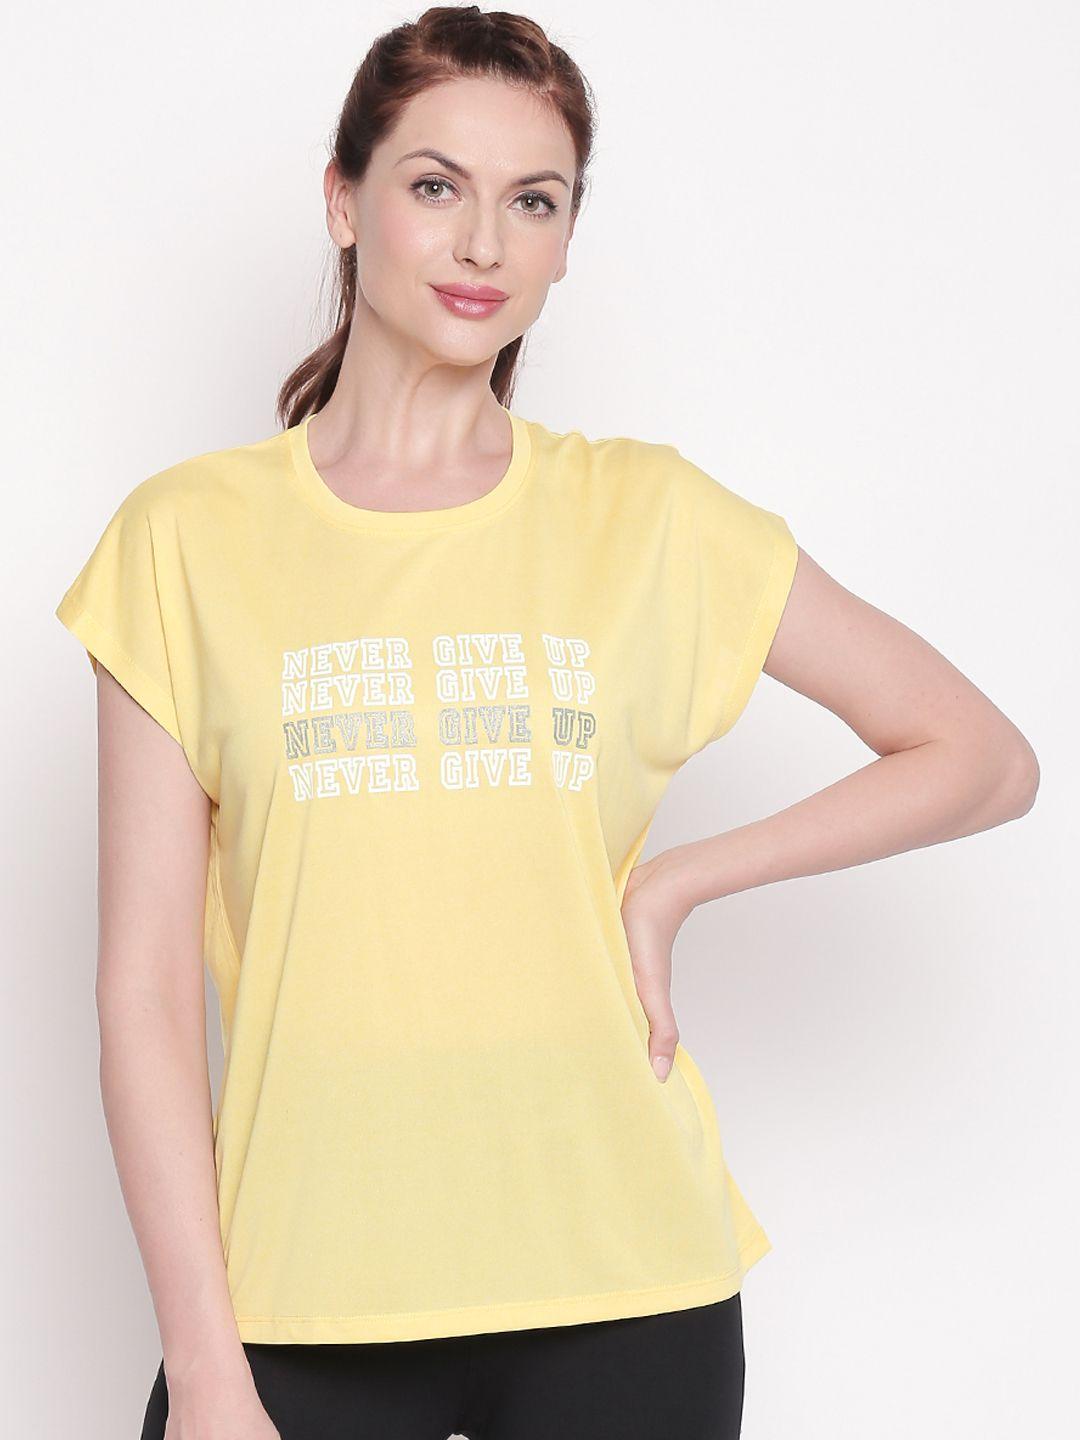 ajile by pantaloons women yellow printed top